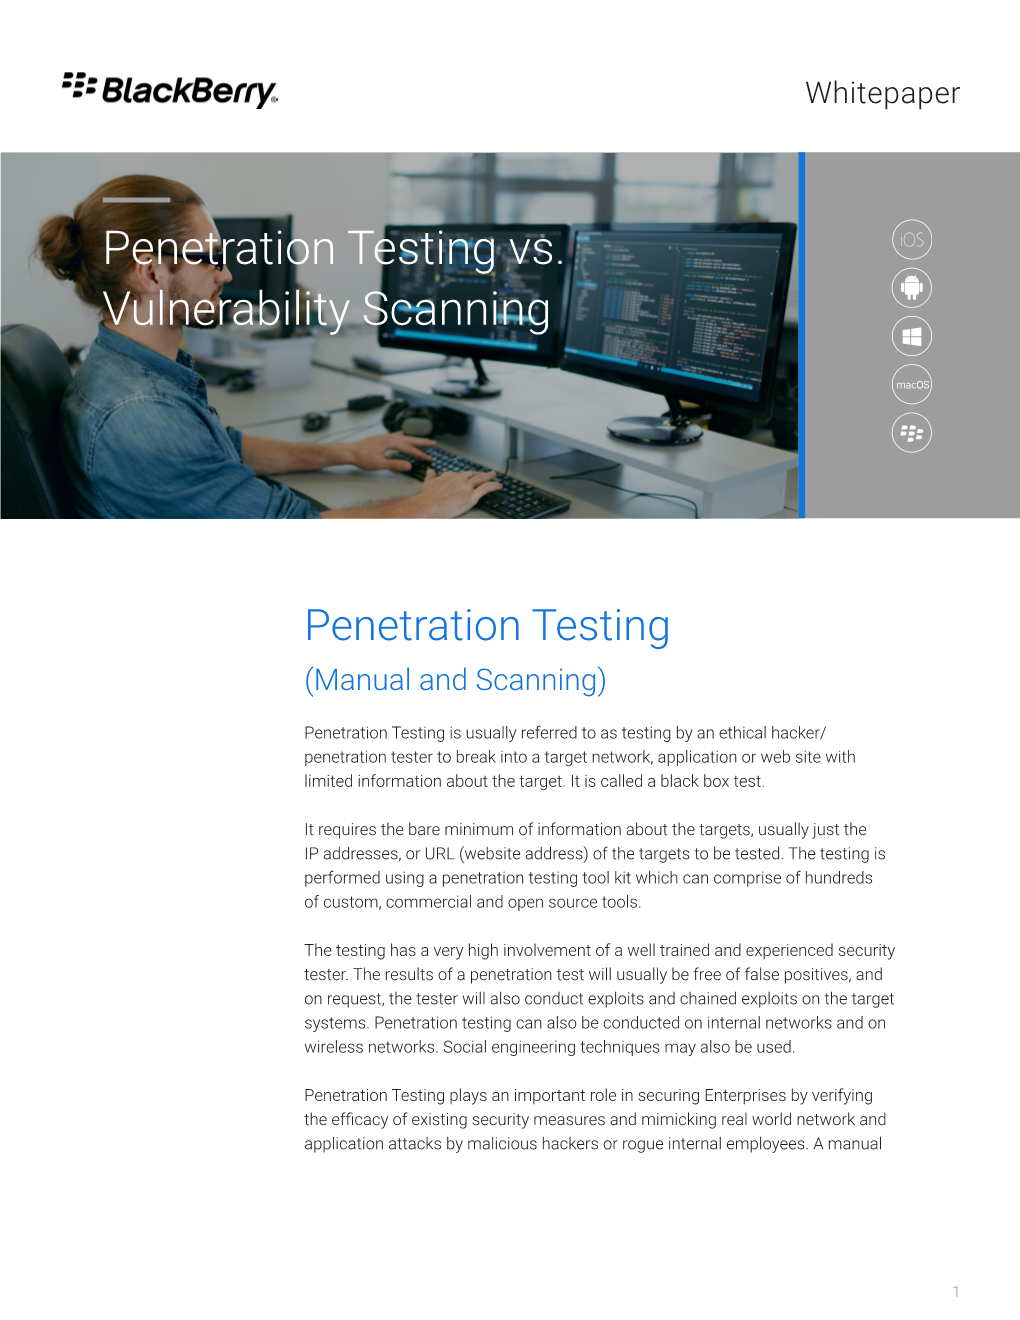 Penetration Testing Vs. Vulnerability Scanning